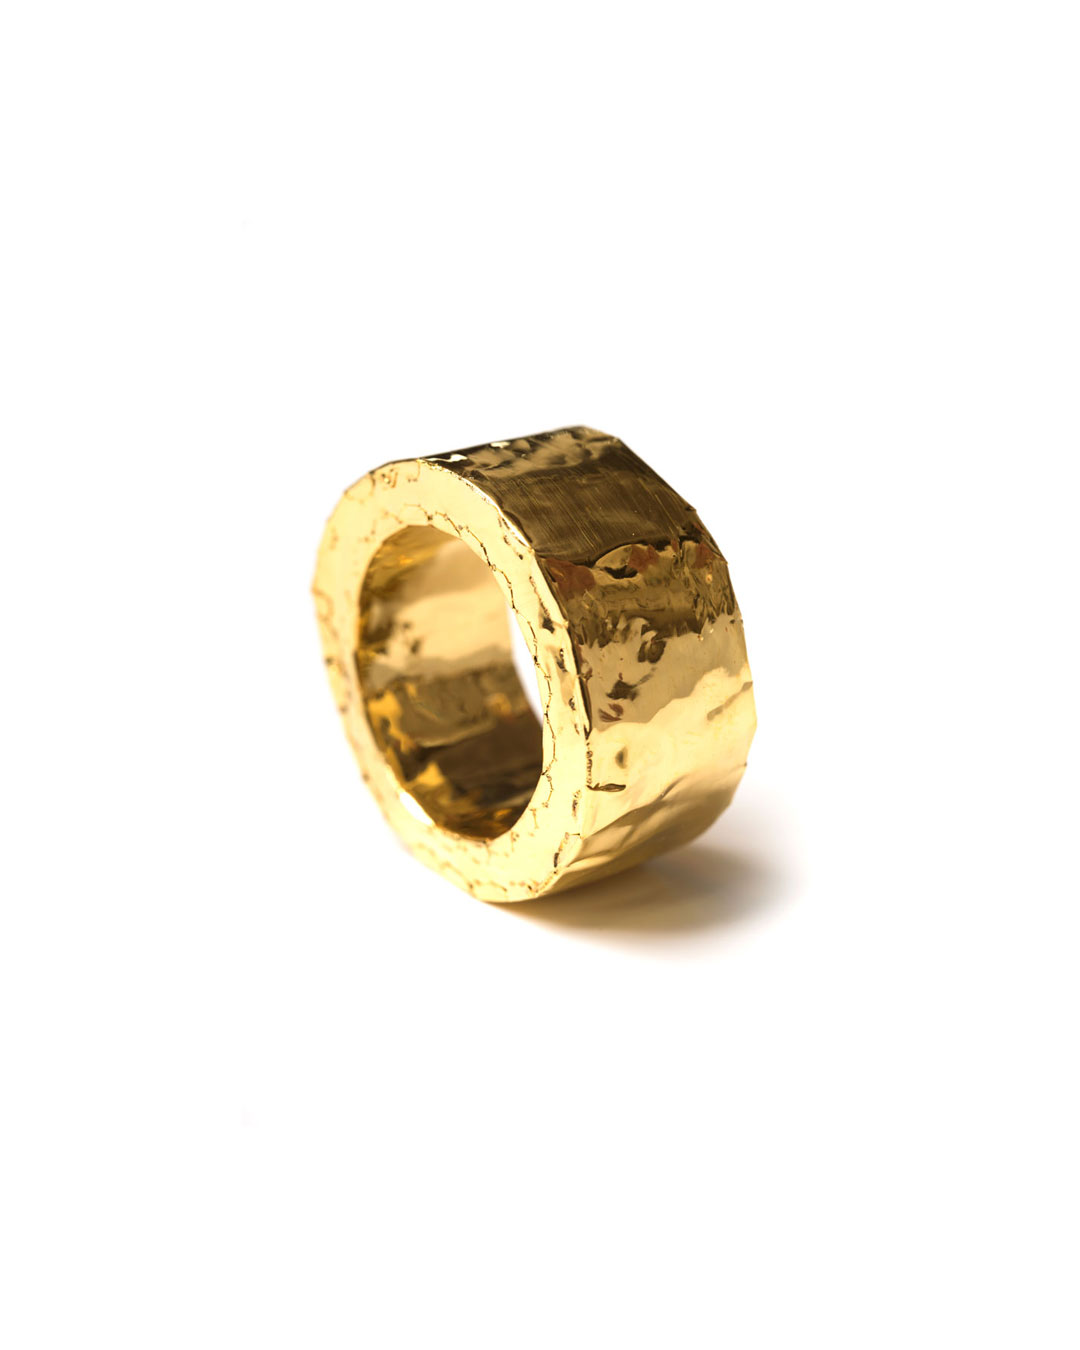 Carla Nuis, Furl 5, 2018, ring; fine gold, 30 x 30 x 4 mm, €1250